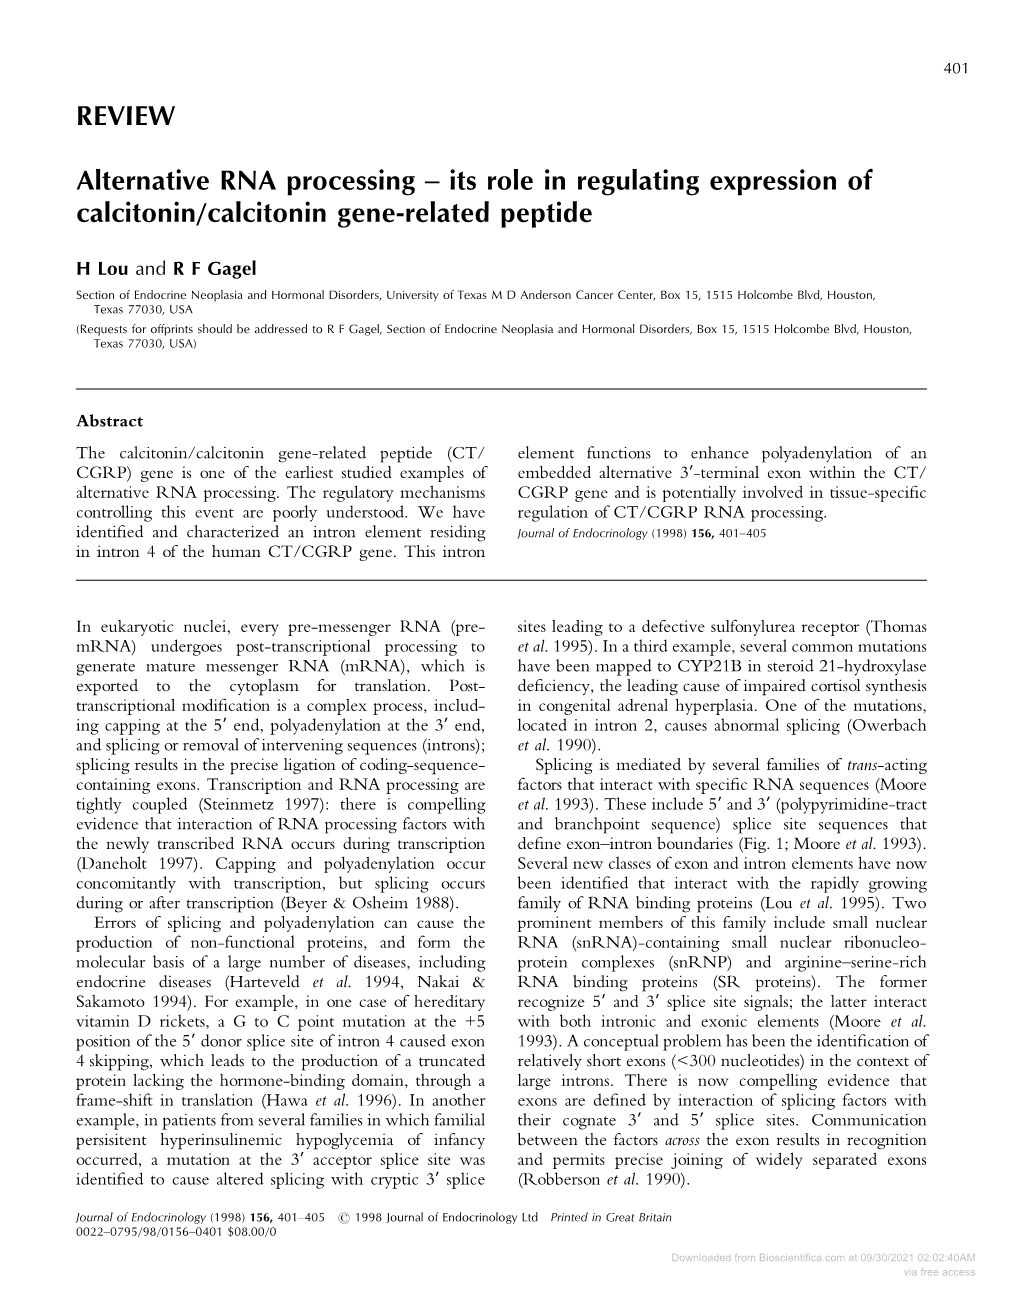 REVIEW Alternative RNA Processing